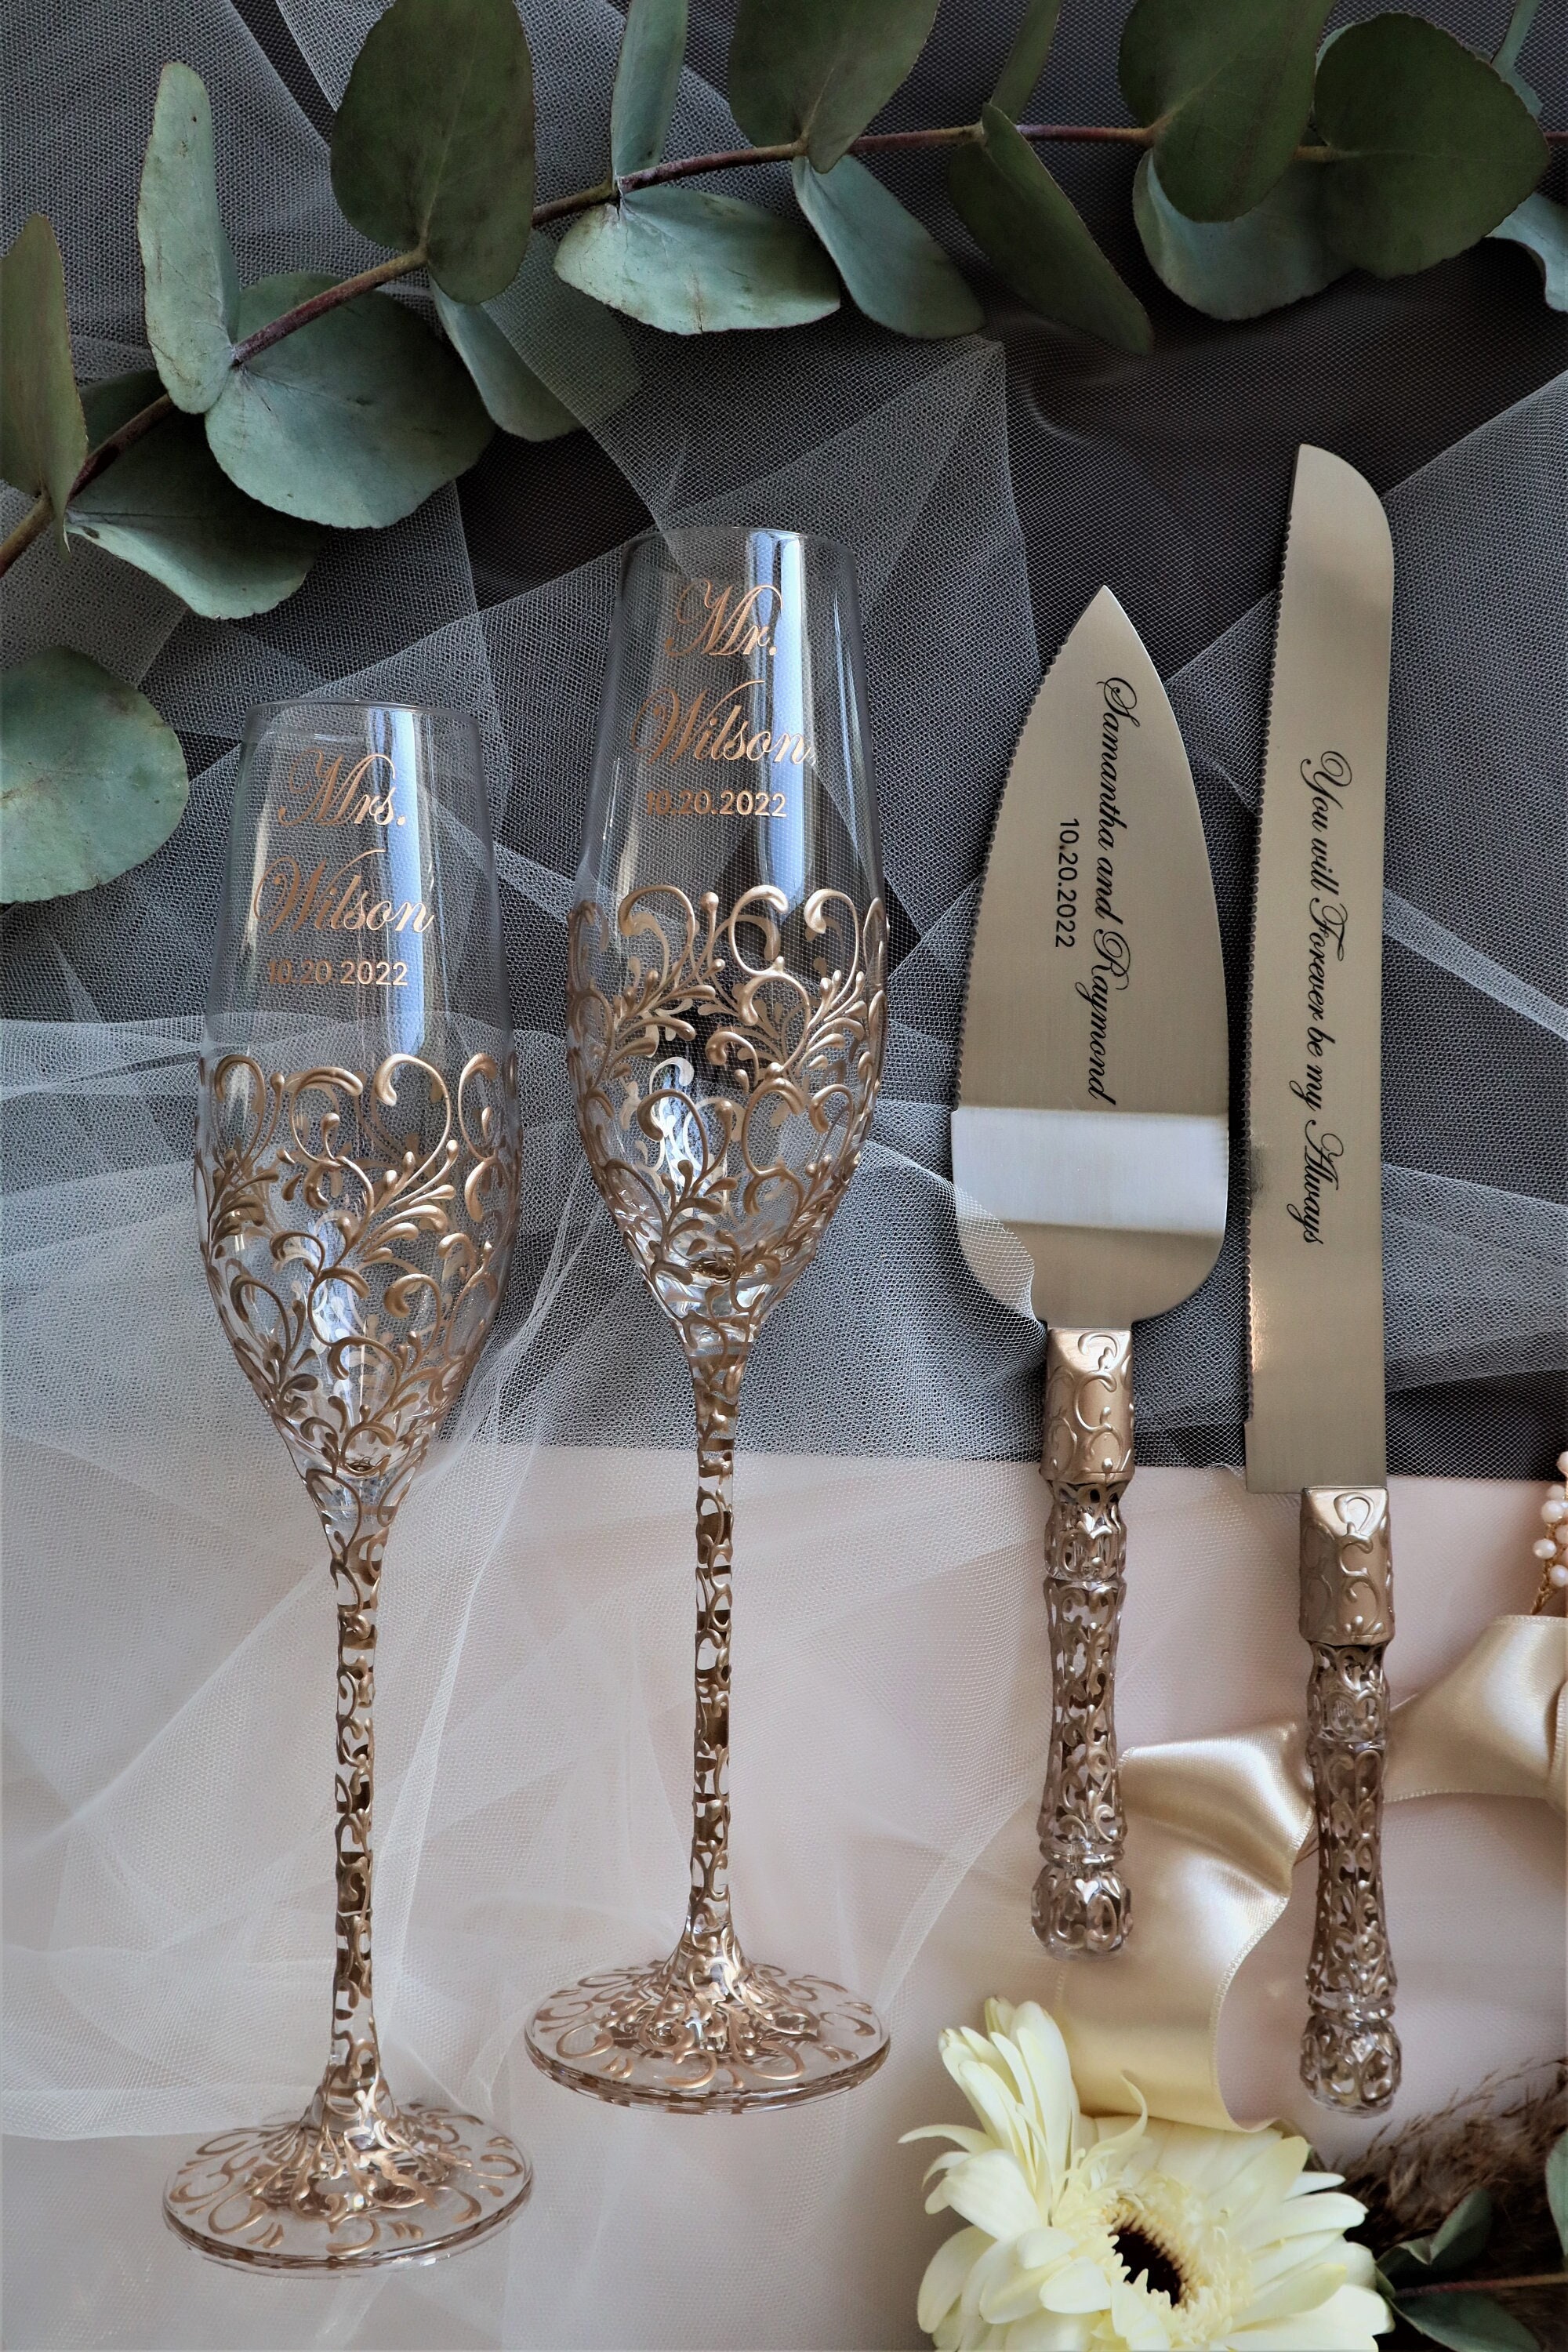 Wedding Champagne Flutes, Wedding Cake Knife and Server Set